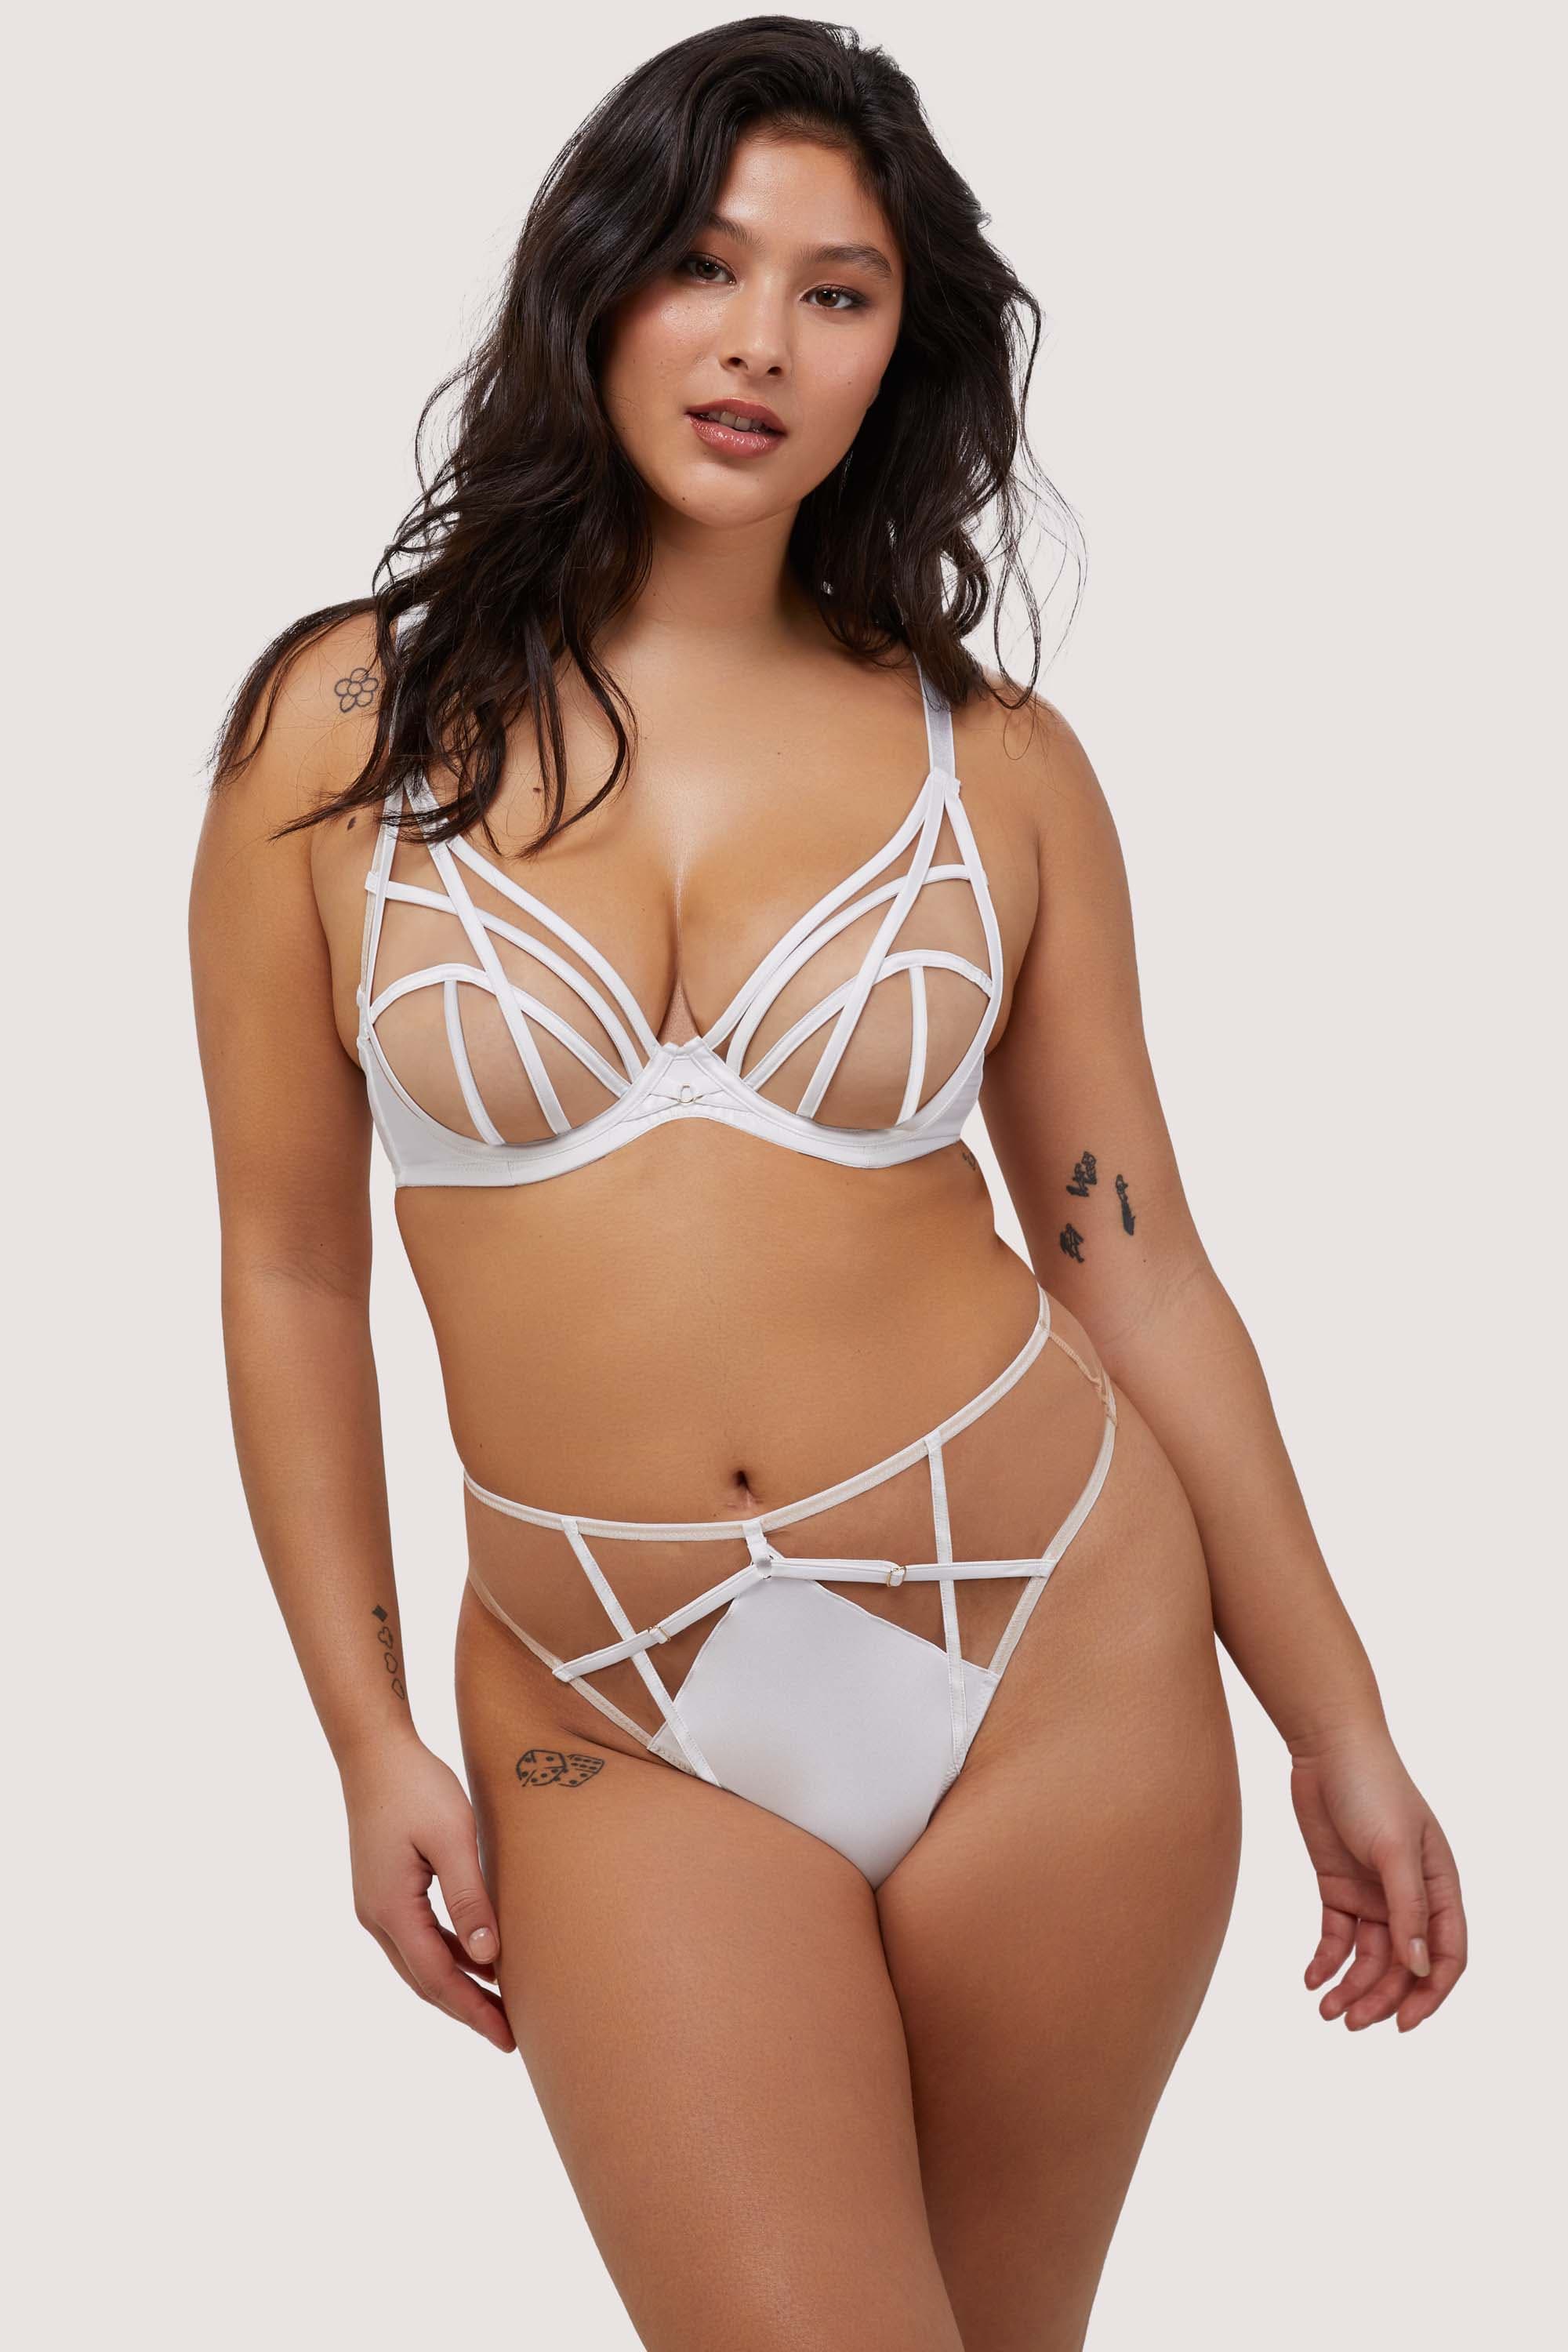 Model wears sexy white strap detail lingerie set